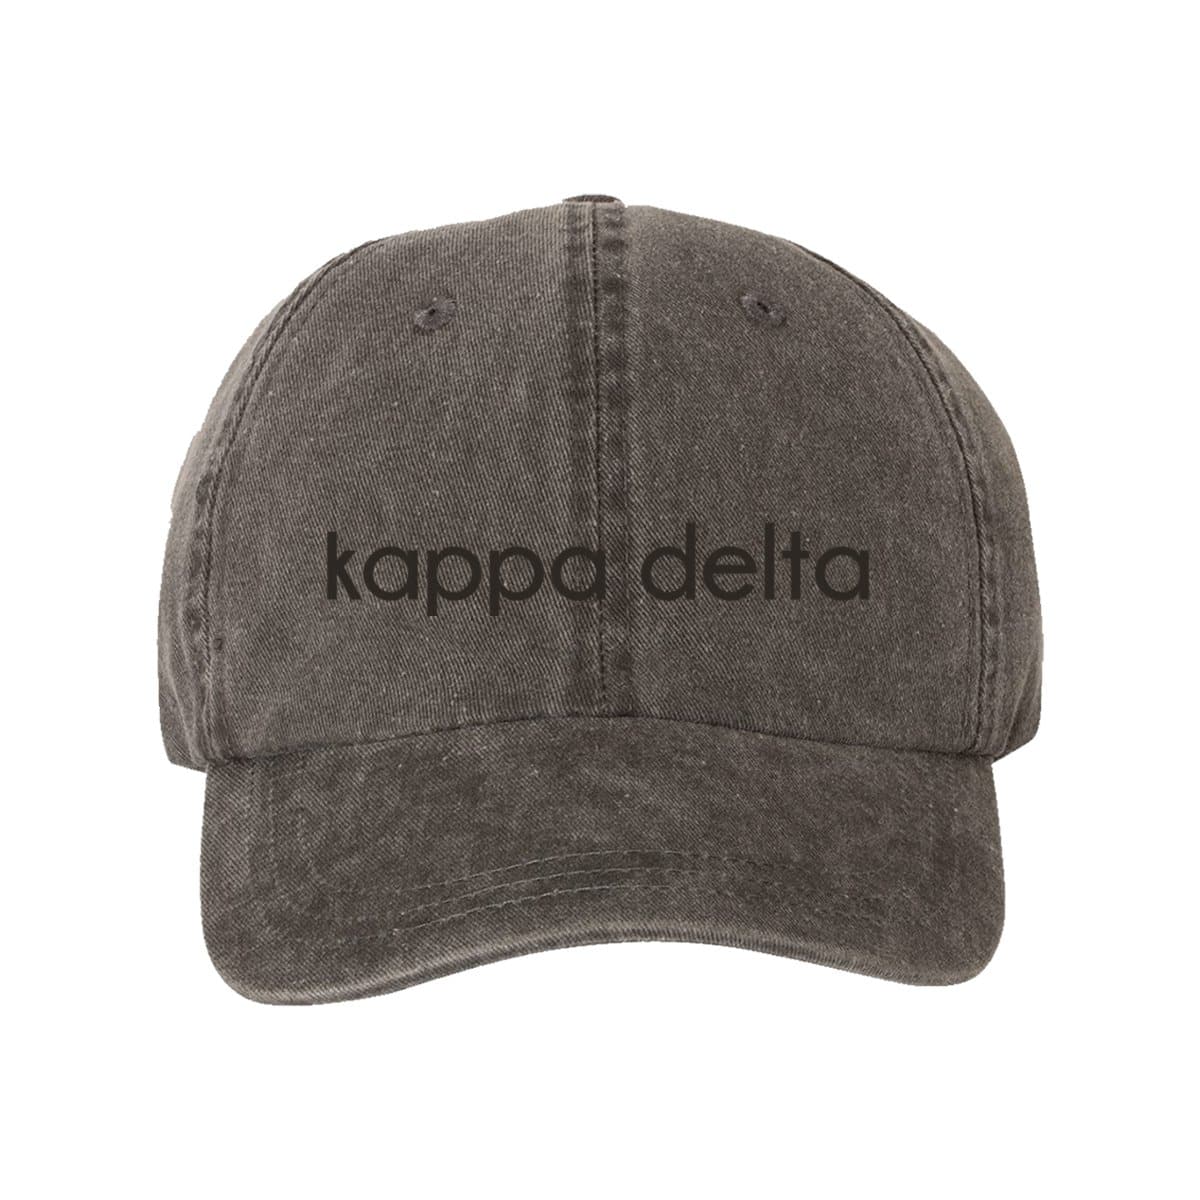 Kappa Delta Tone On Tone Hat | Kappa Delta | Headwear > Billed hats